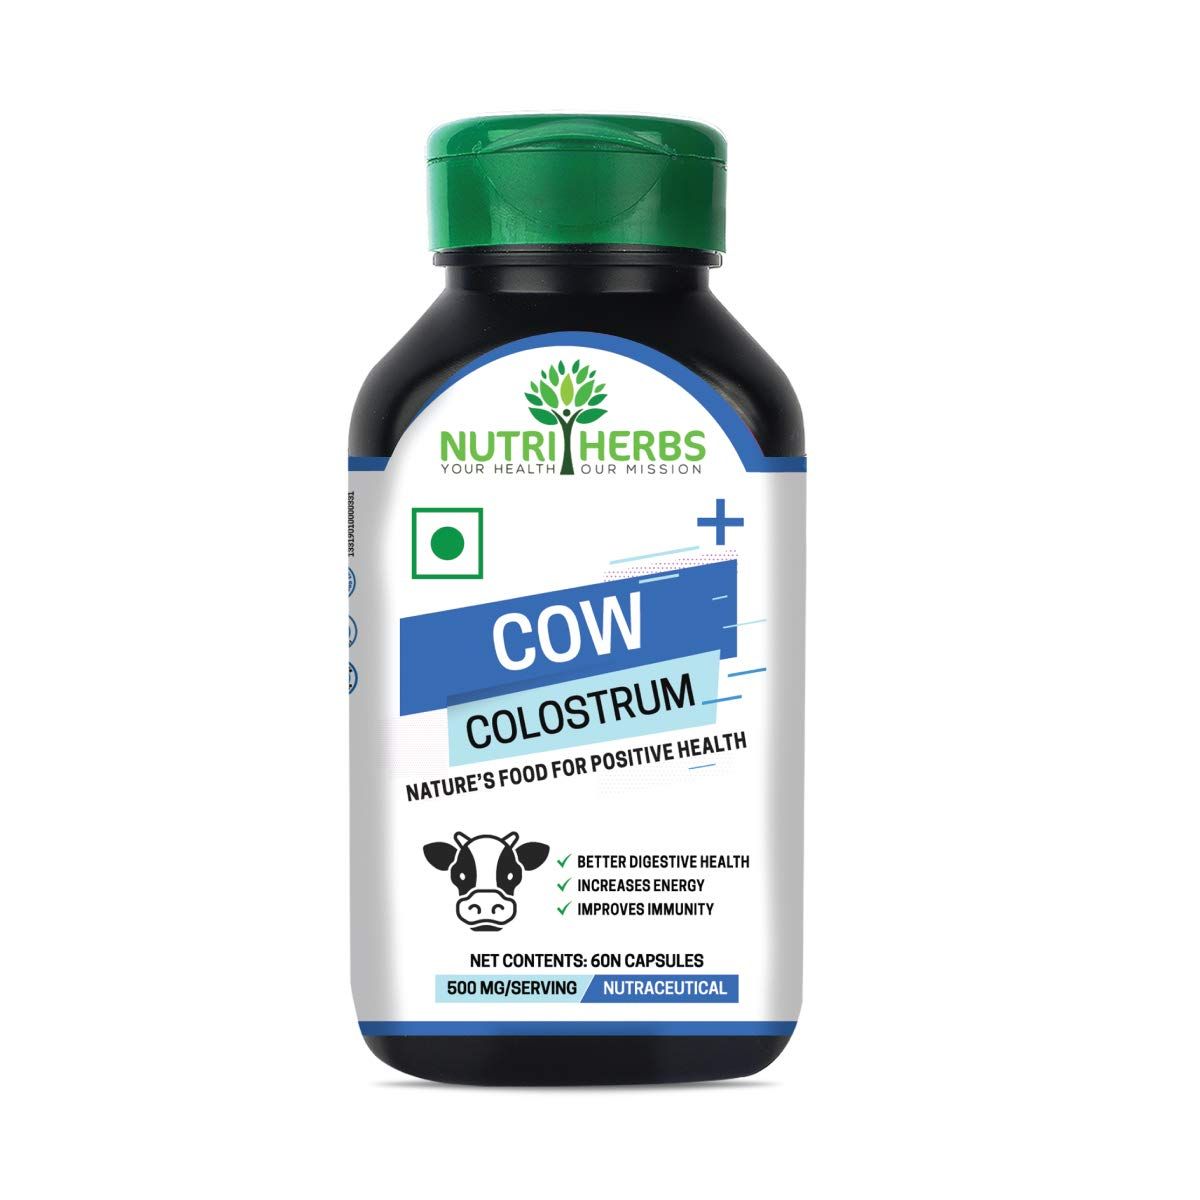 Nutriherbs Cow Colostrum Plus Image